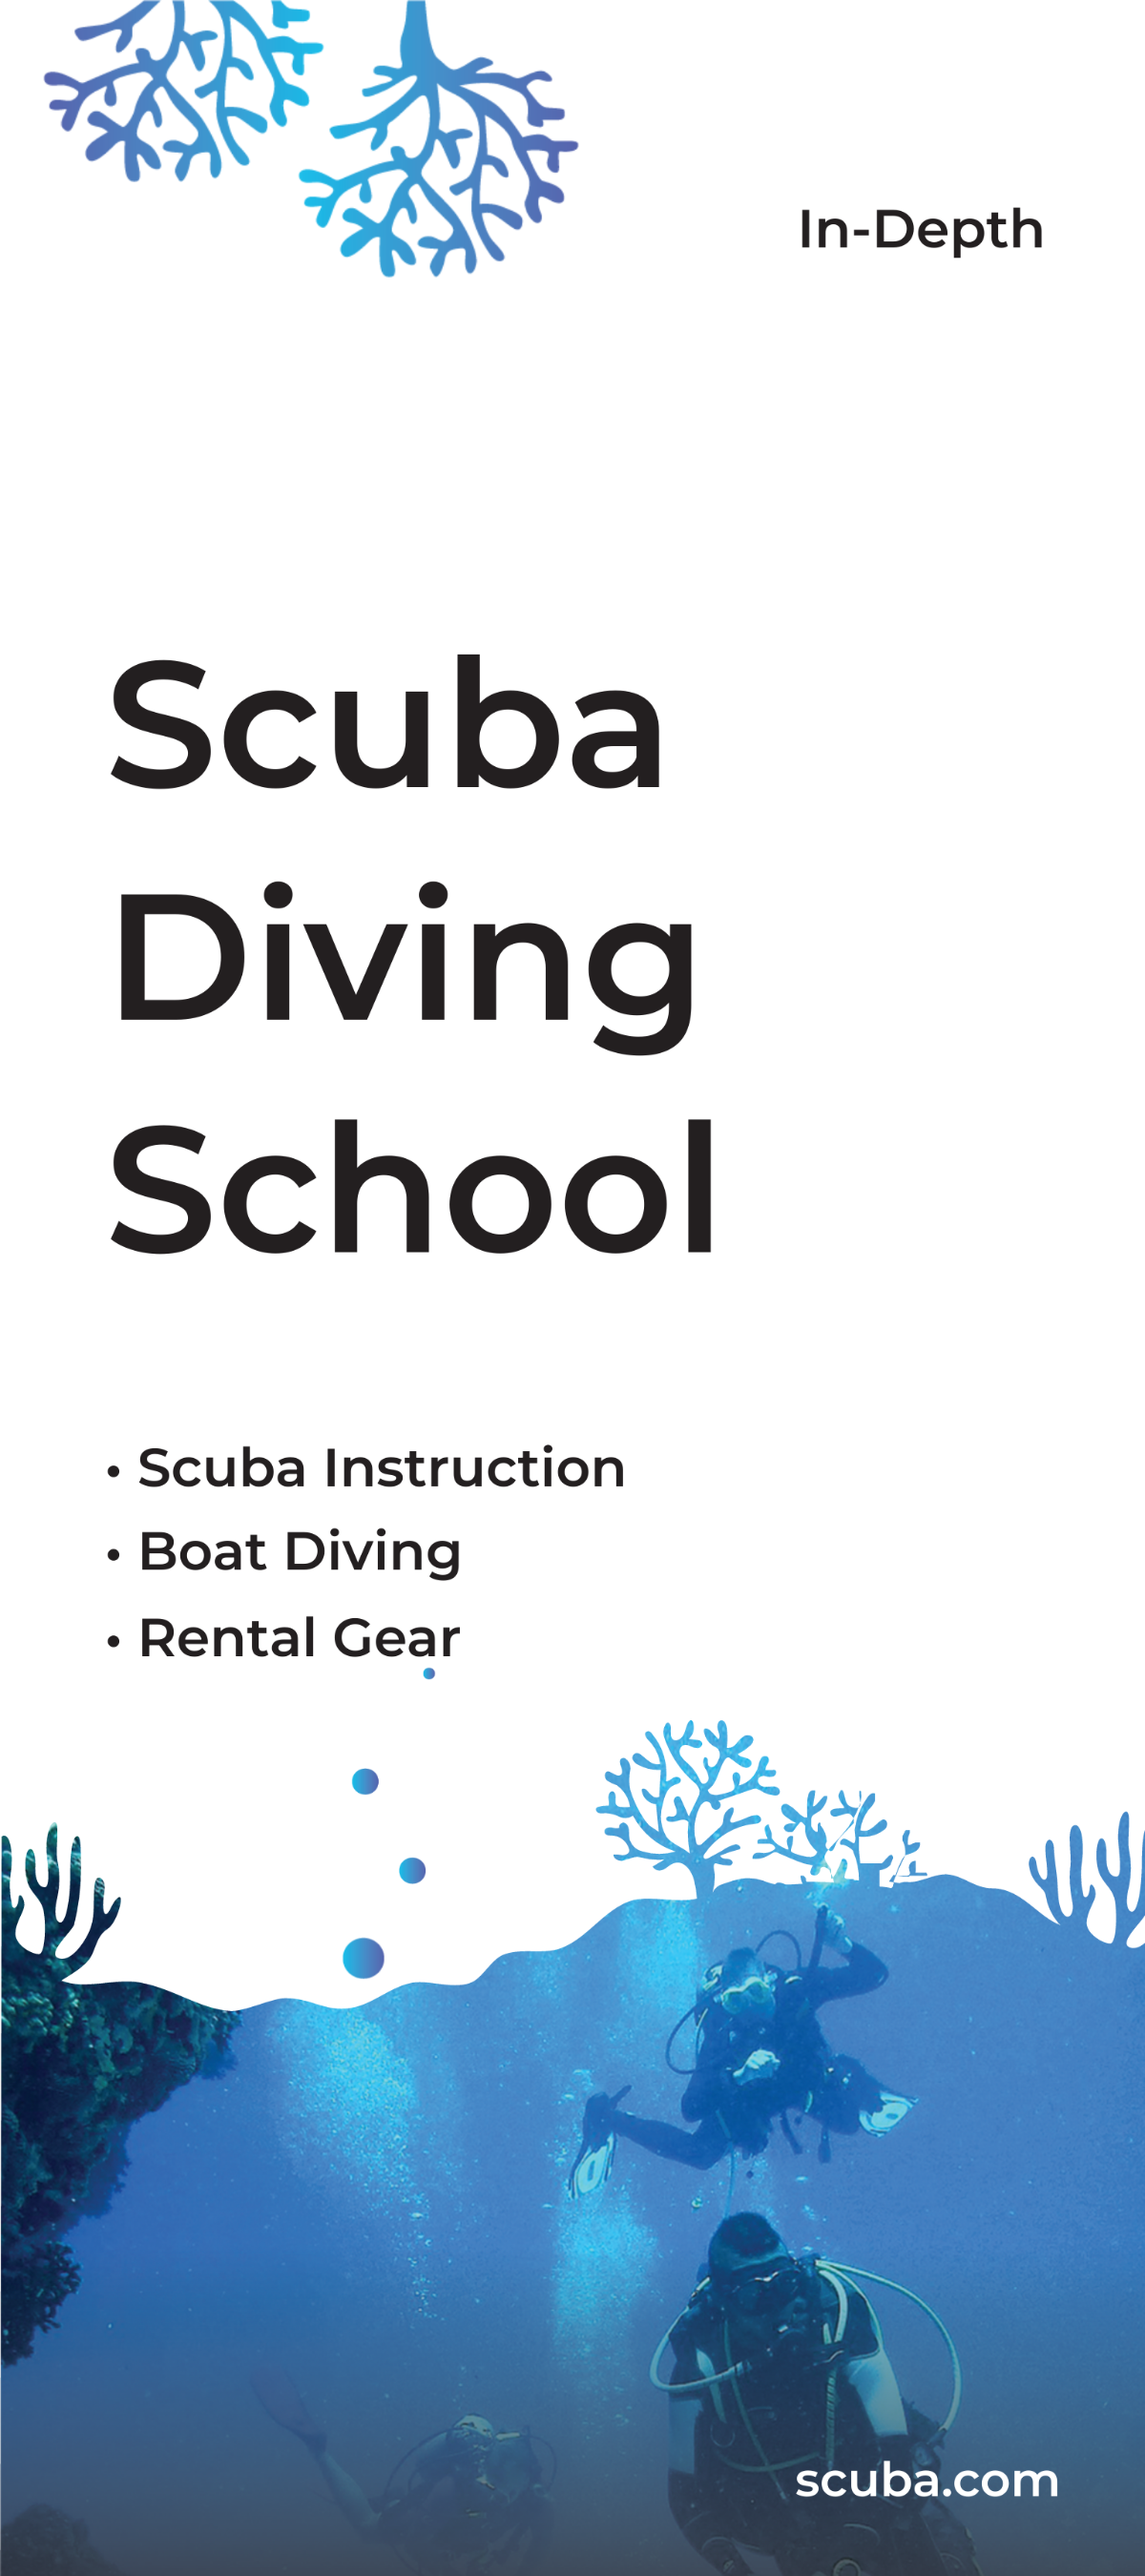 Scuba Diving School DL Card Template